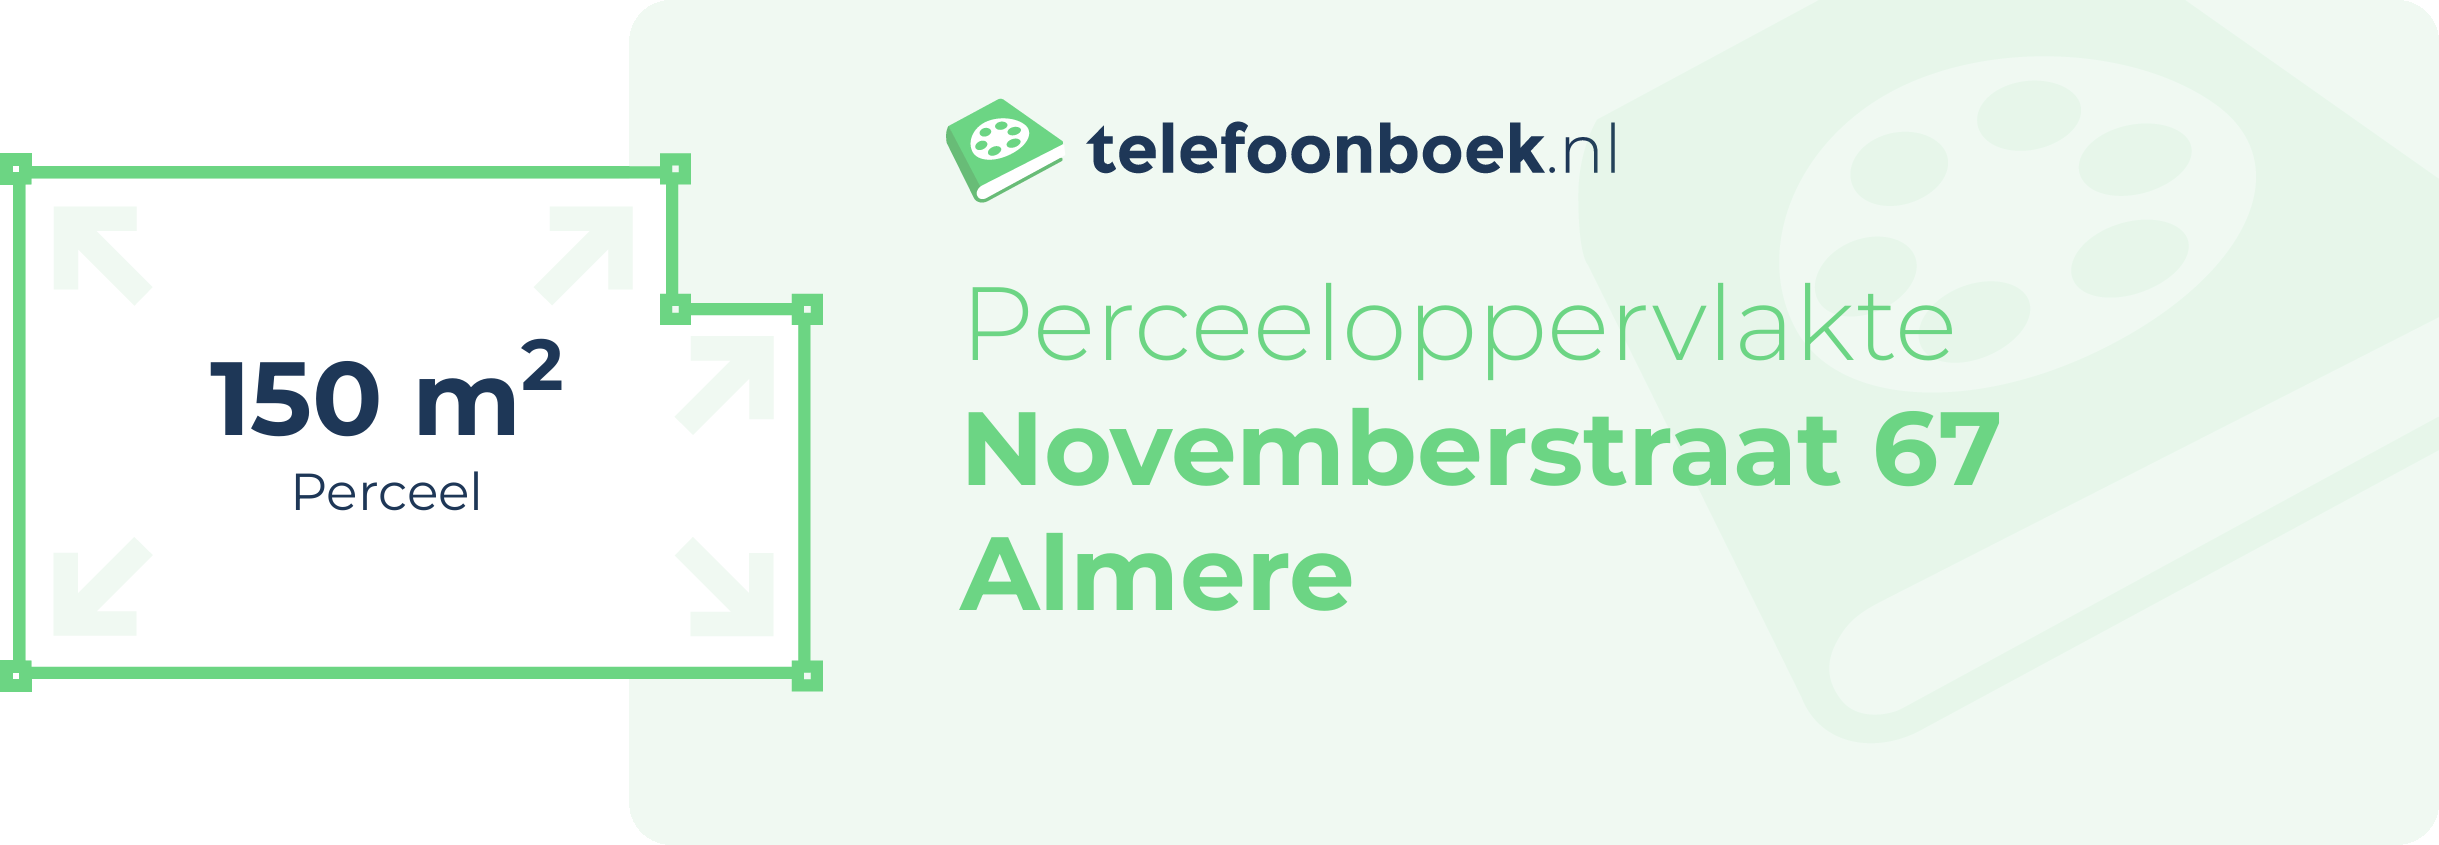 Perceeloppervlakte Novemberstraat 67 Almere